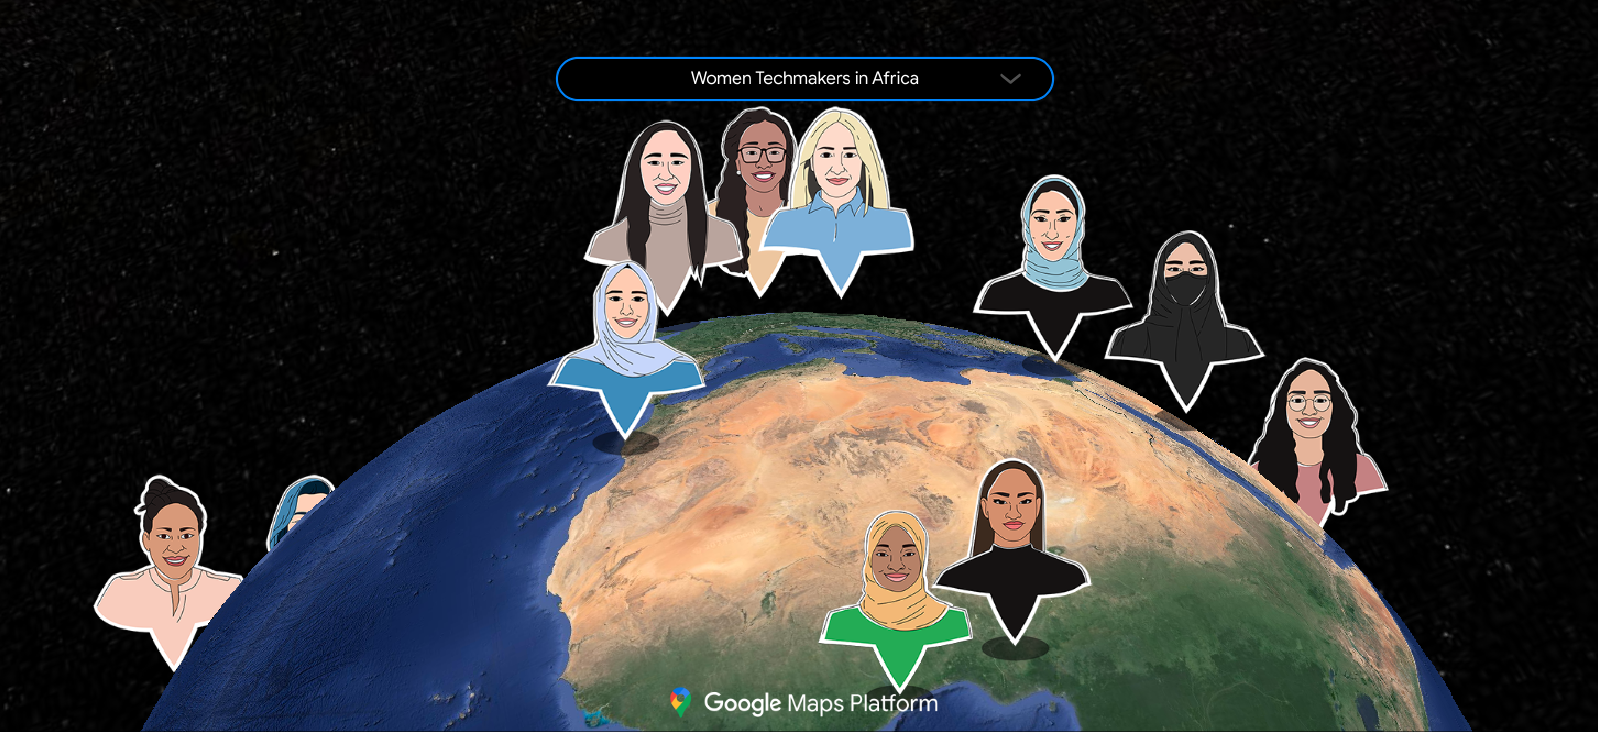 Women Techmakers Ambassadors의 글로벌 네트워크를 보여주는 지도로, 지도에서 각 국가에 따라 다양한 그룹의 사람들을 보여줍니다.